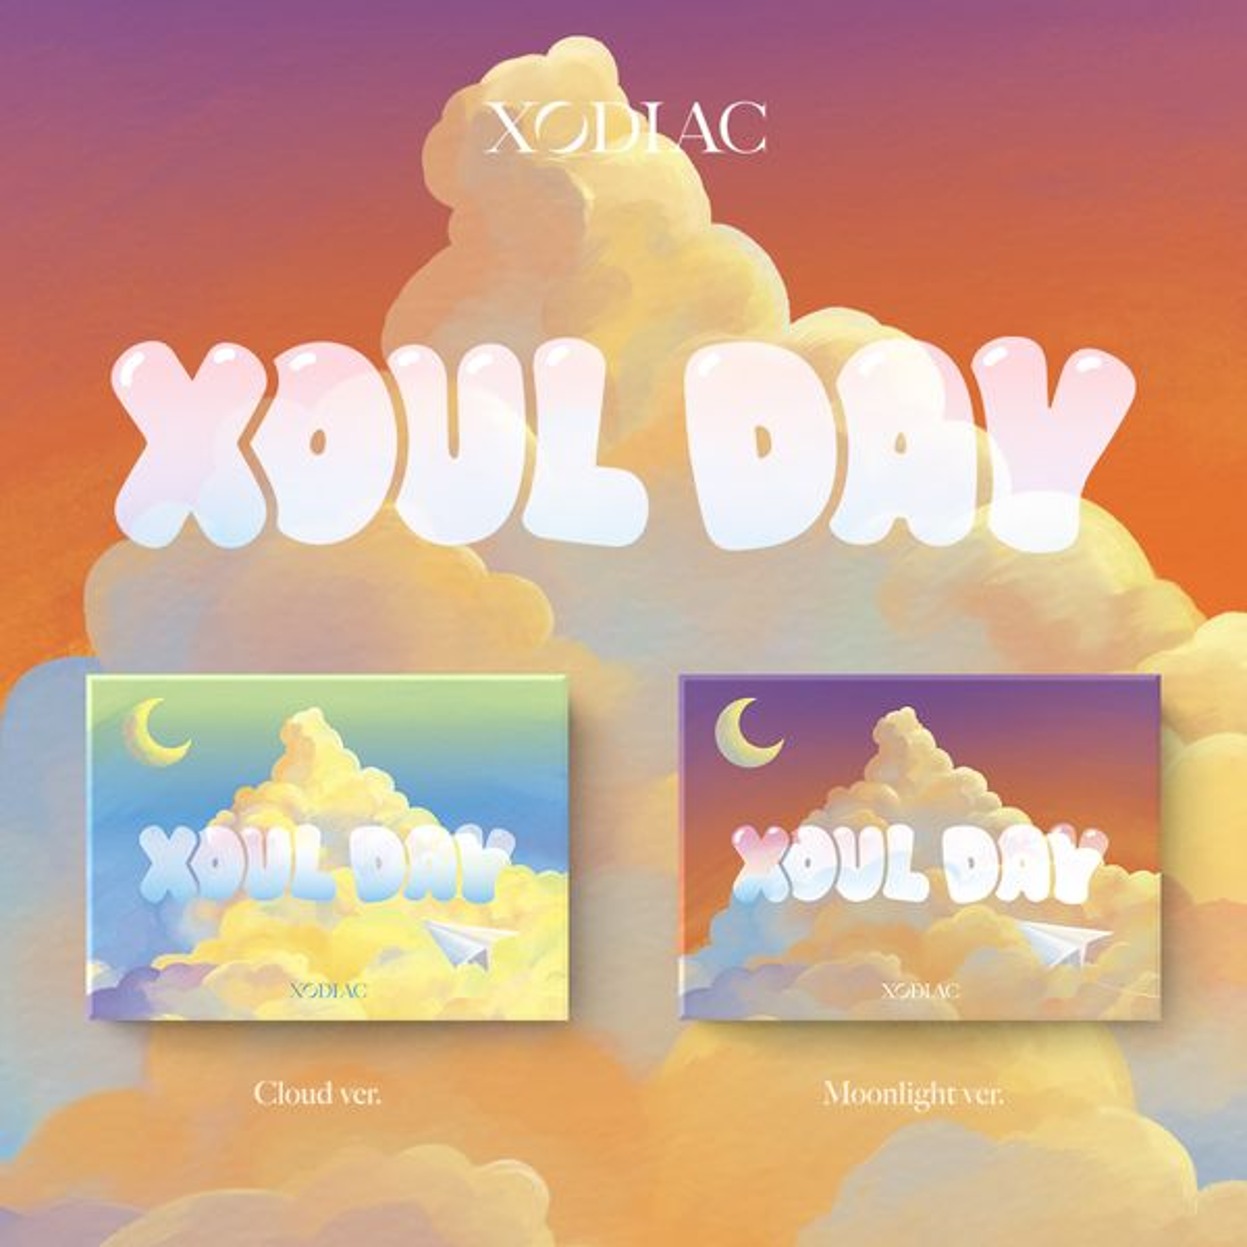 SODIAC - 2nd single album [XOUL DAY] (POCAALBUM) (Random version)